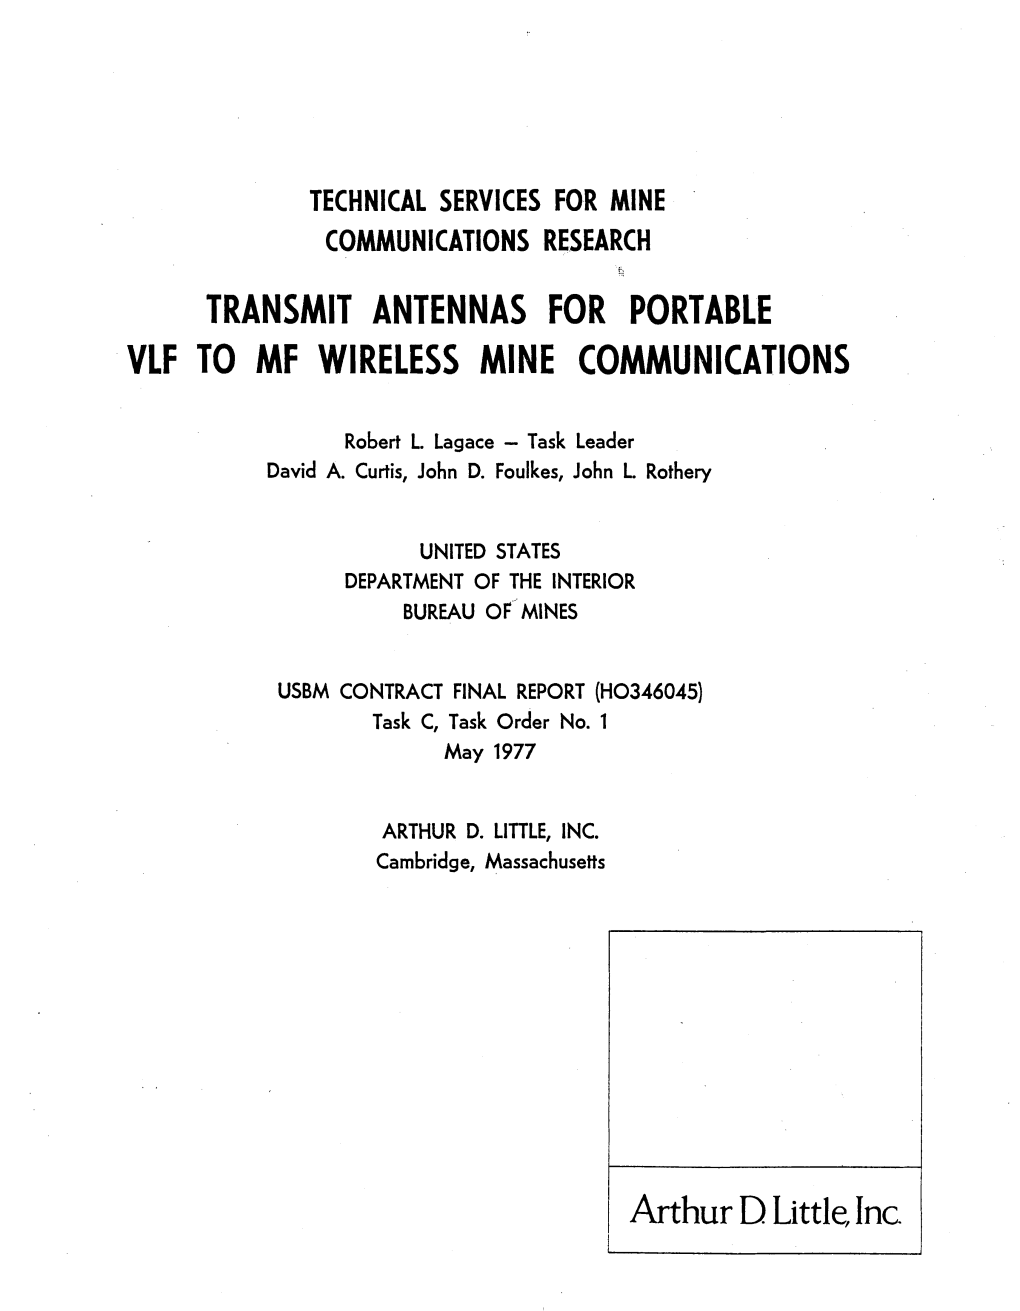 Transmit Antennas for Portable Vlf to Mf Wireless Mine Communications